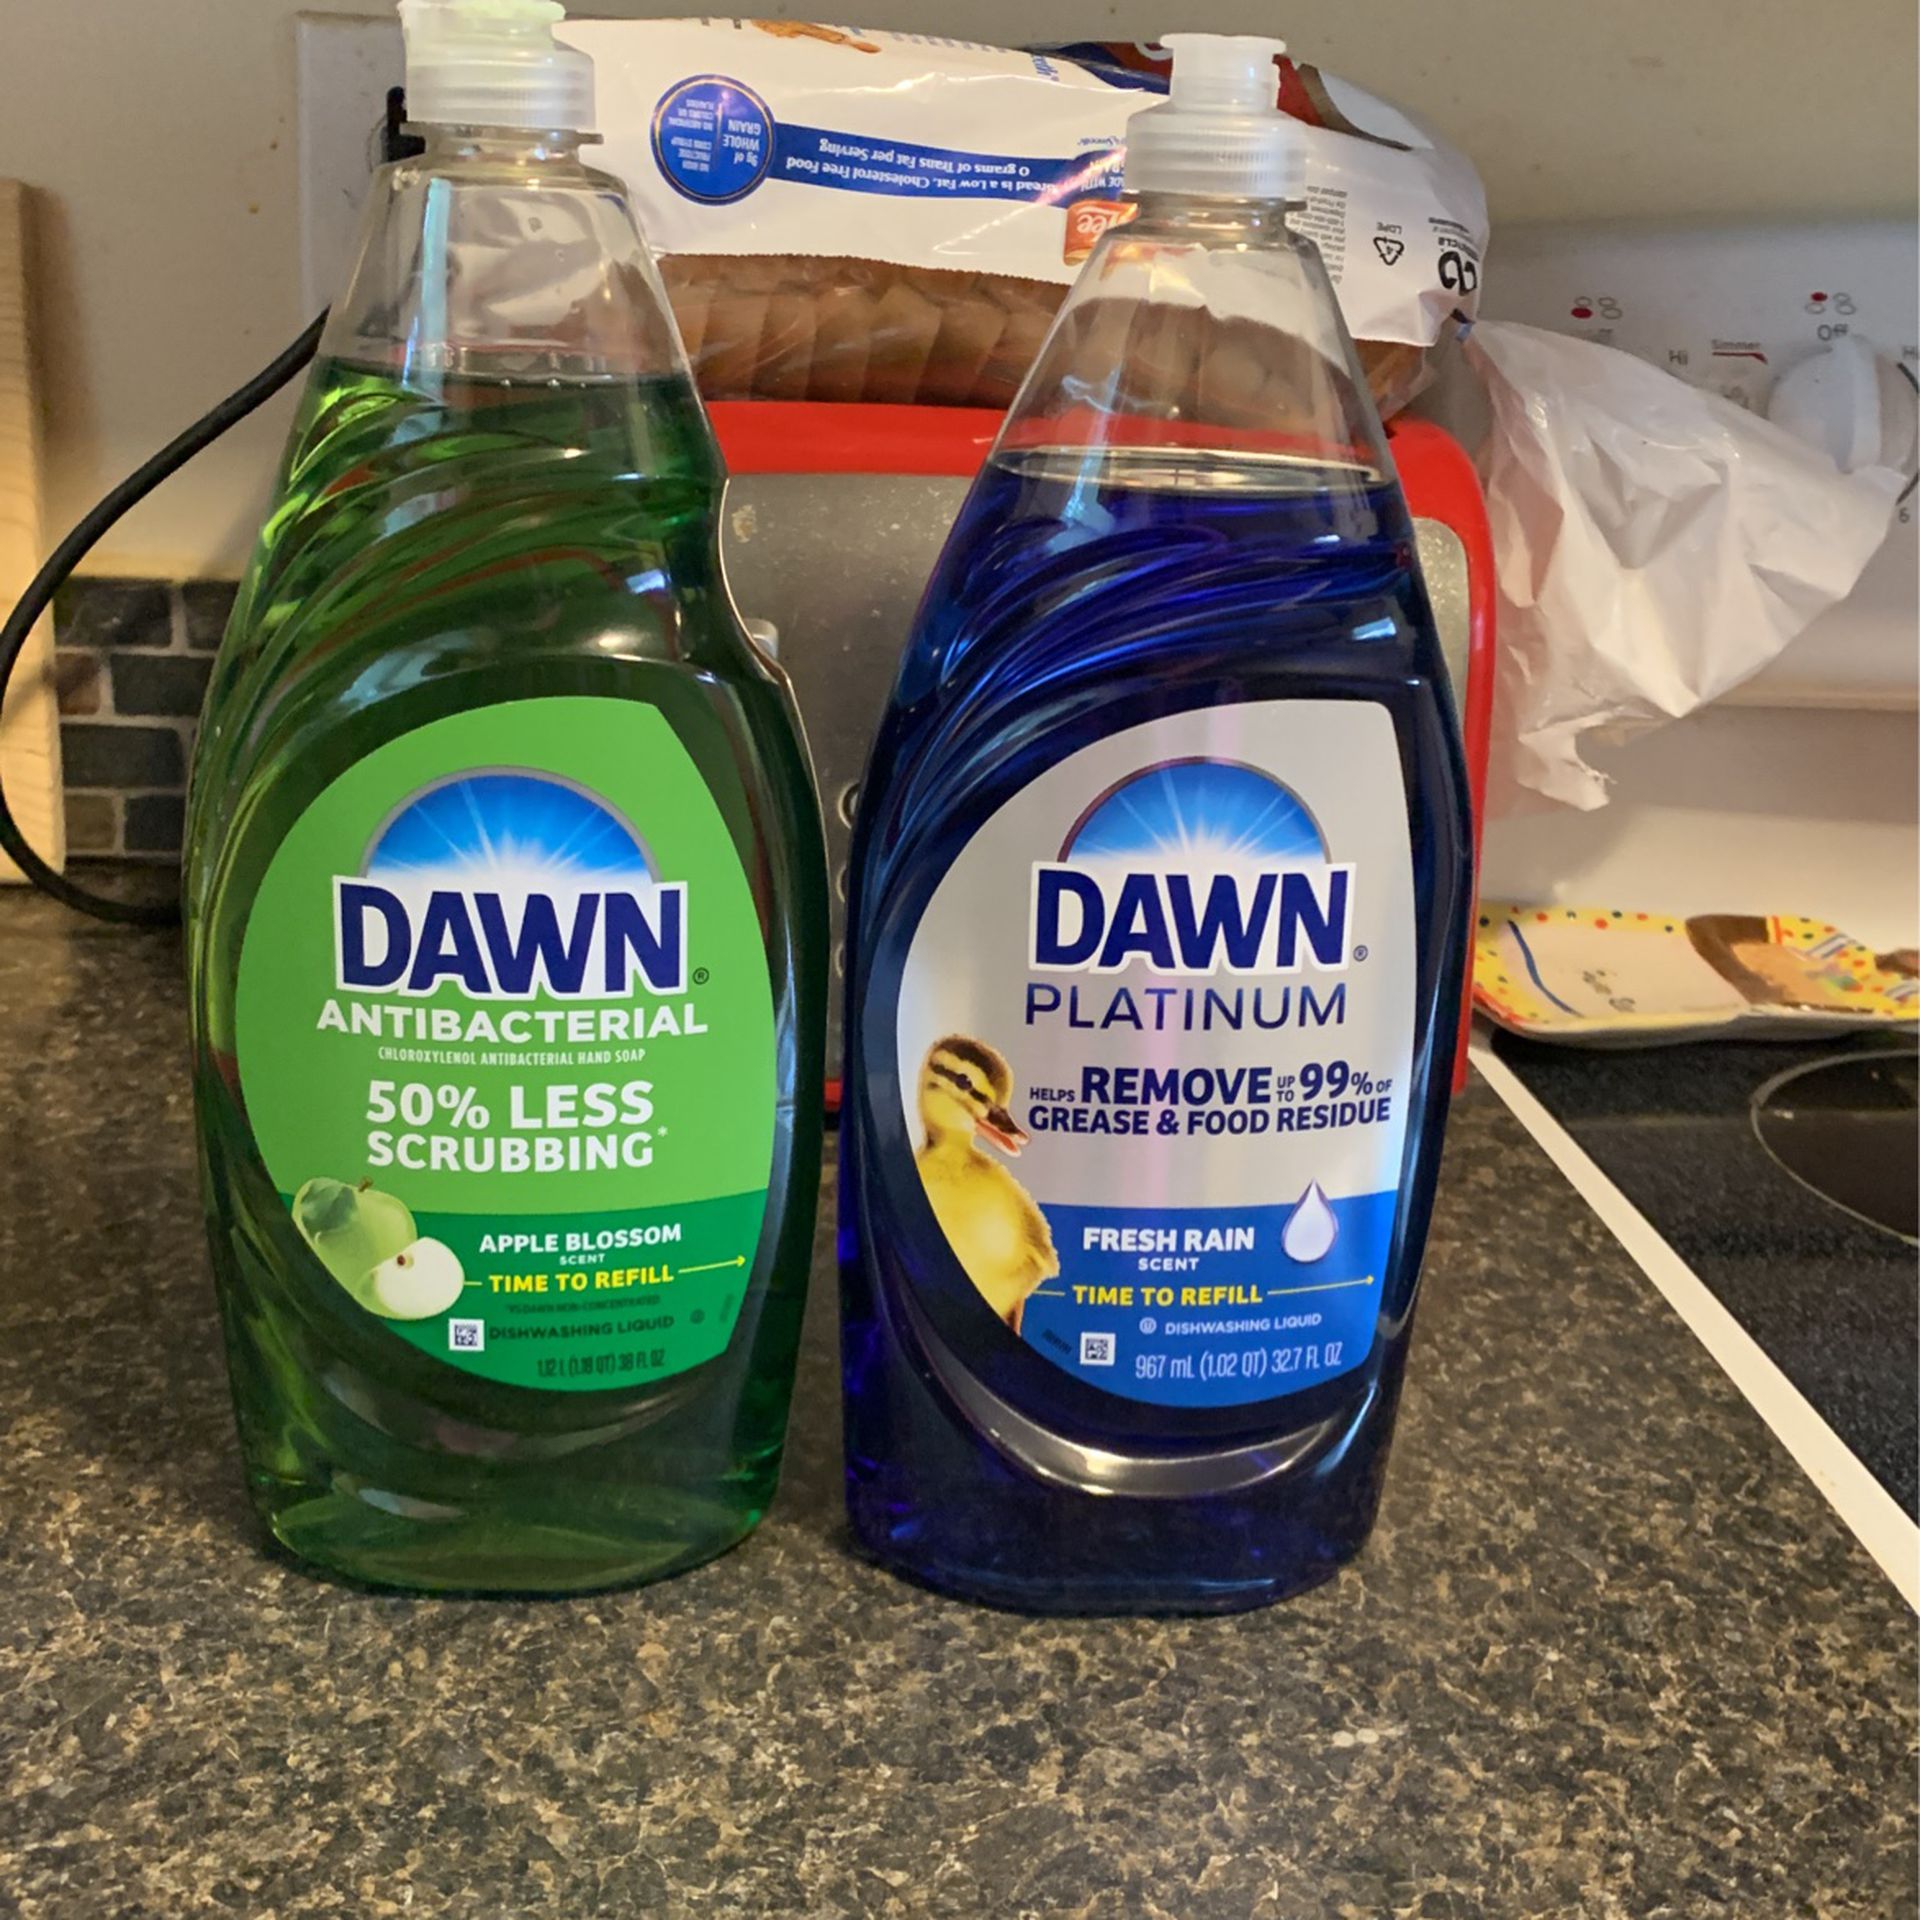 Dawn Dish Liquid-2 Items!($11.68+ Value)